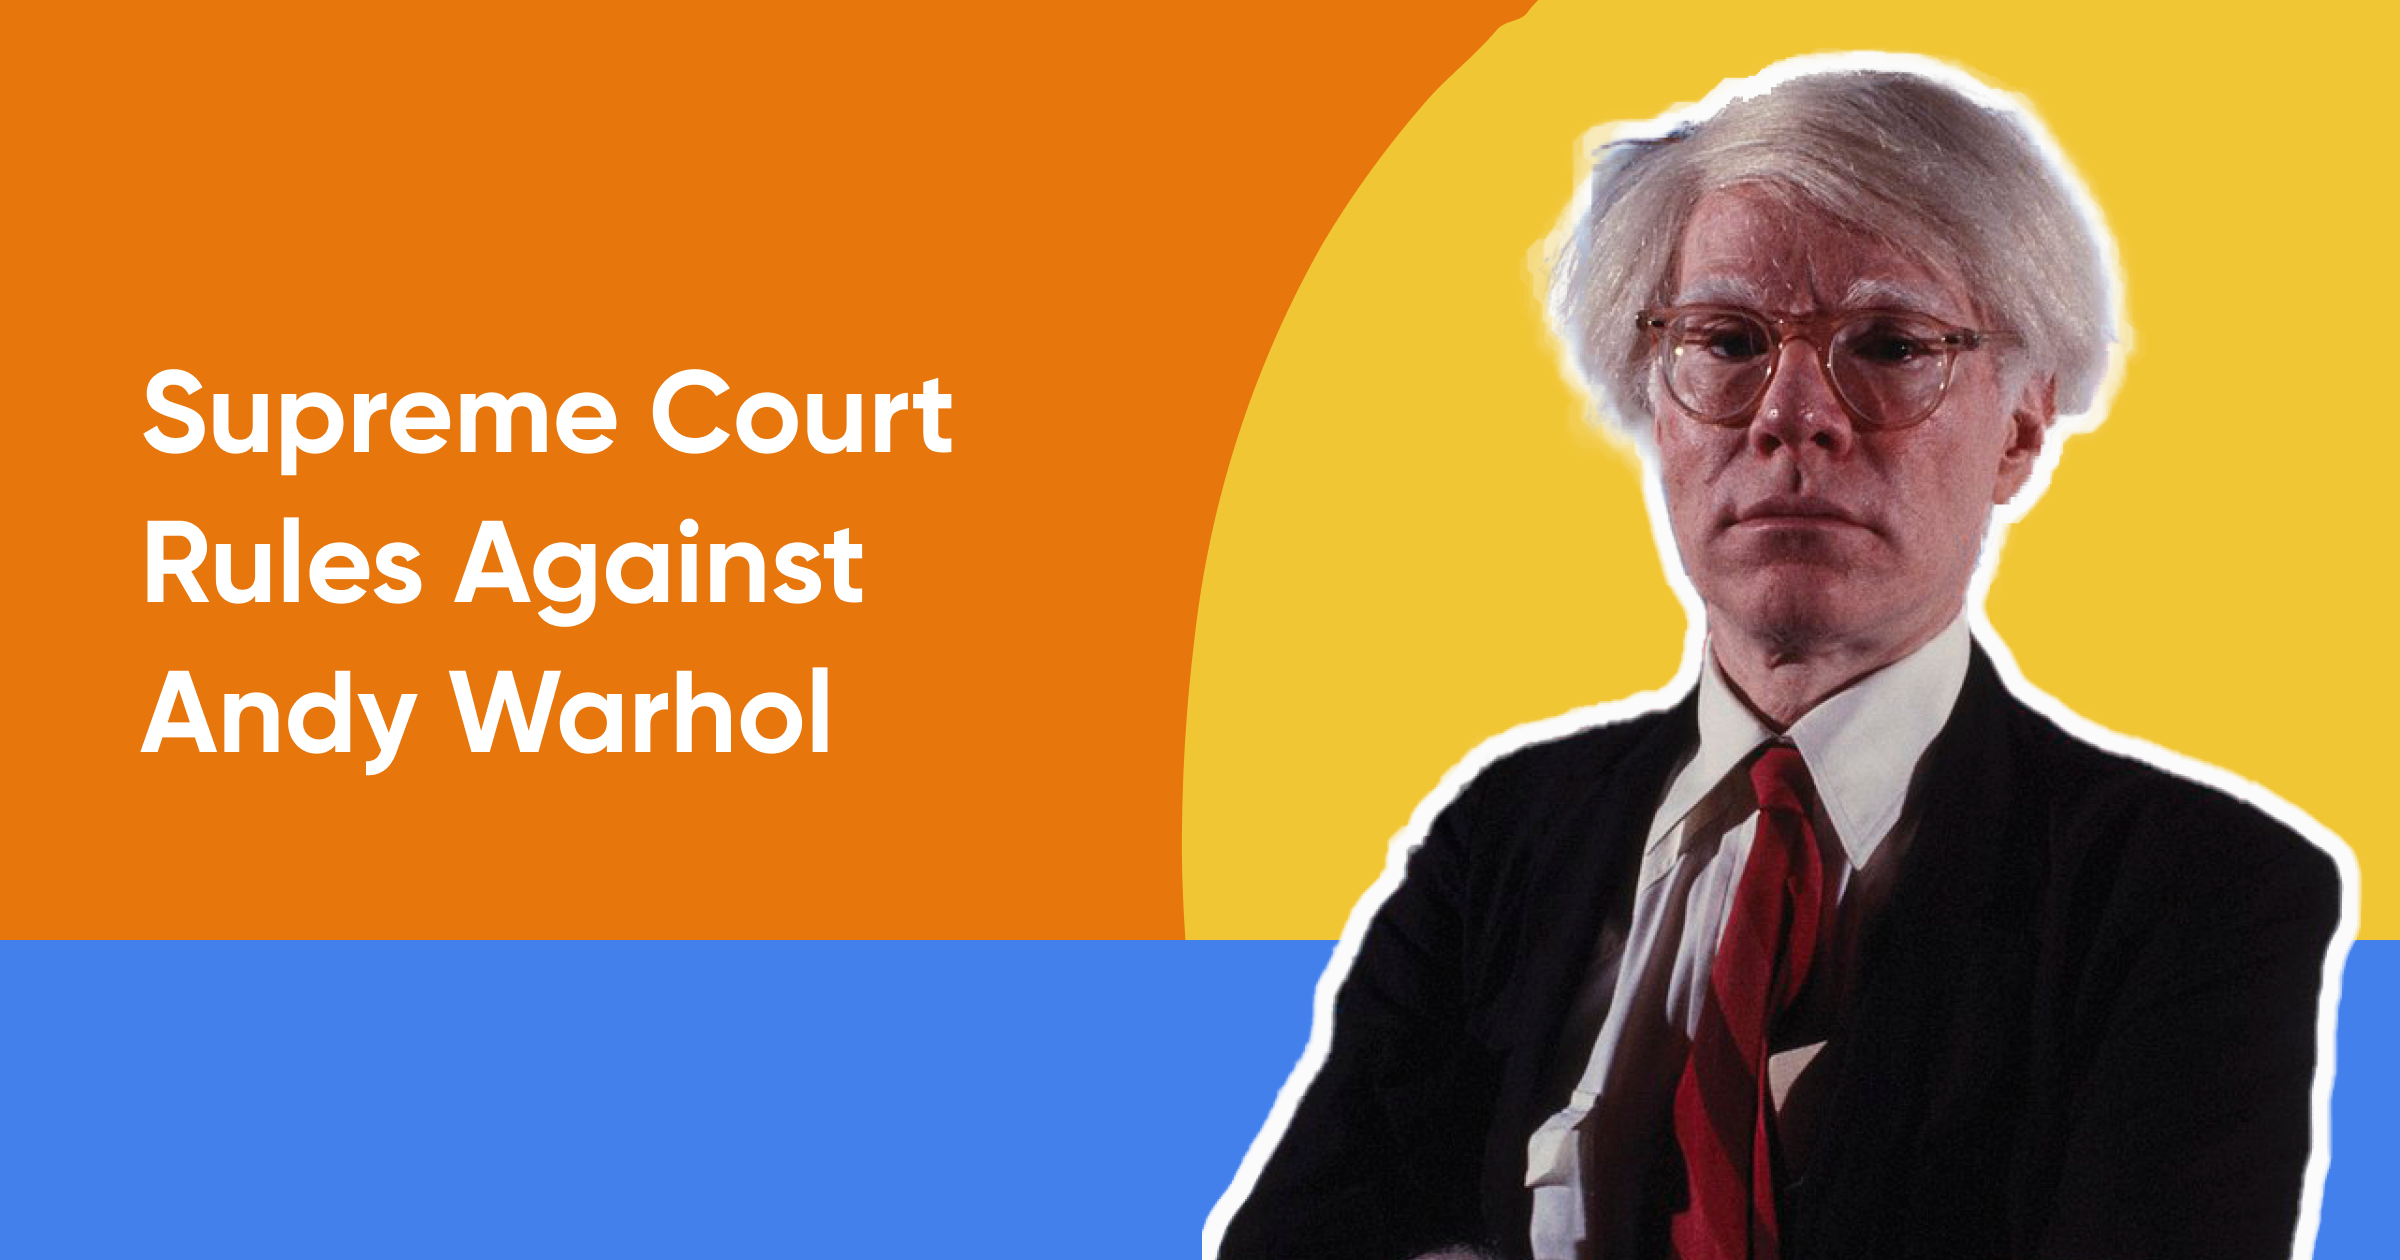 Andy Warhol copyright infringement